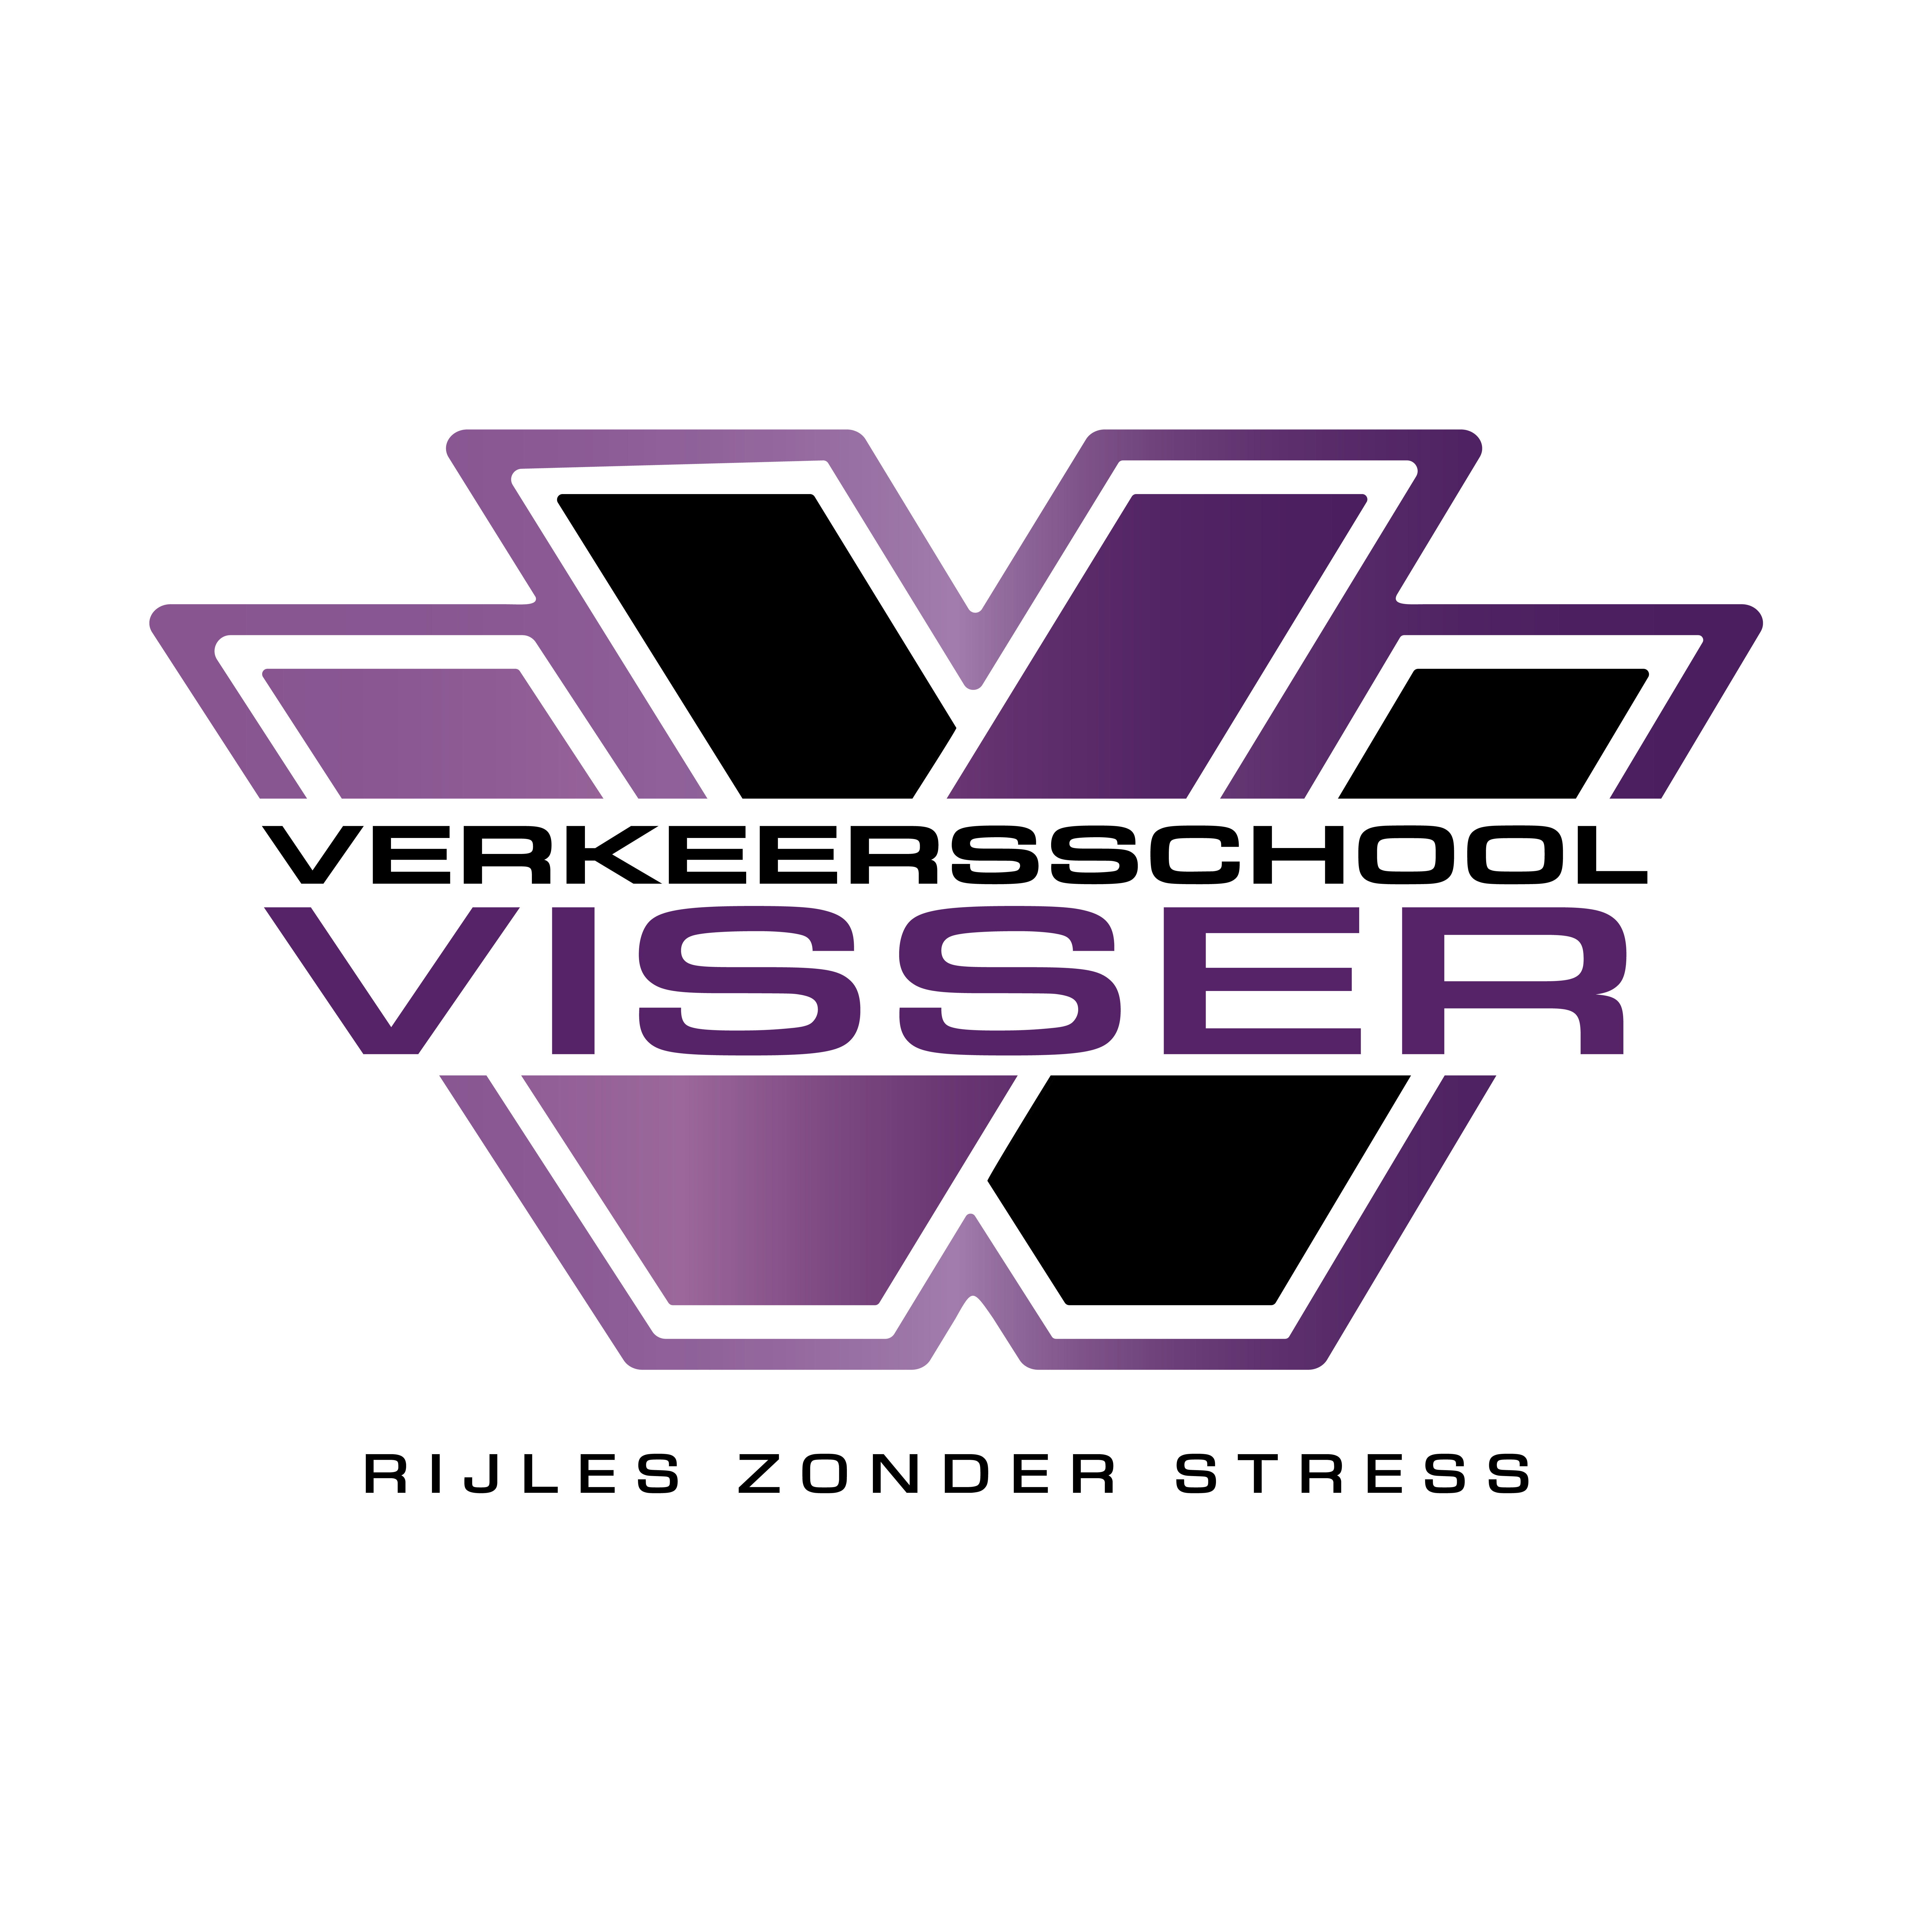 Verkeersschool Visser (transparant)_Logo met slogan_wit